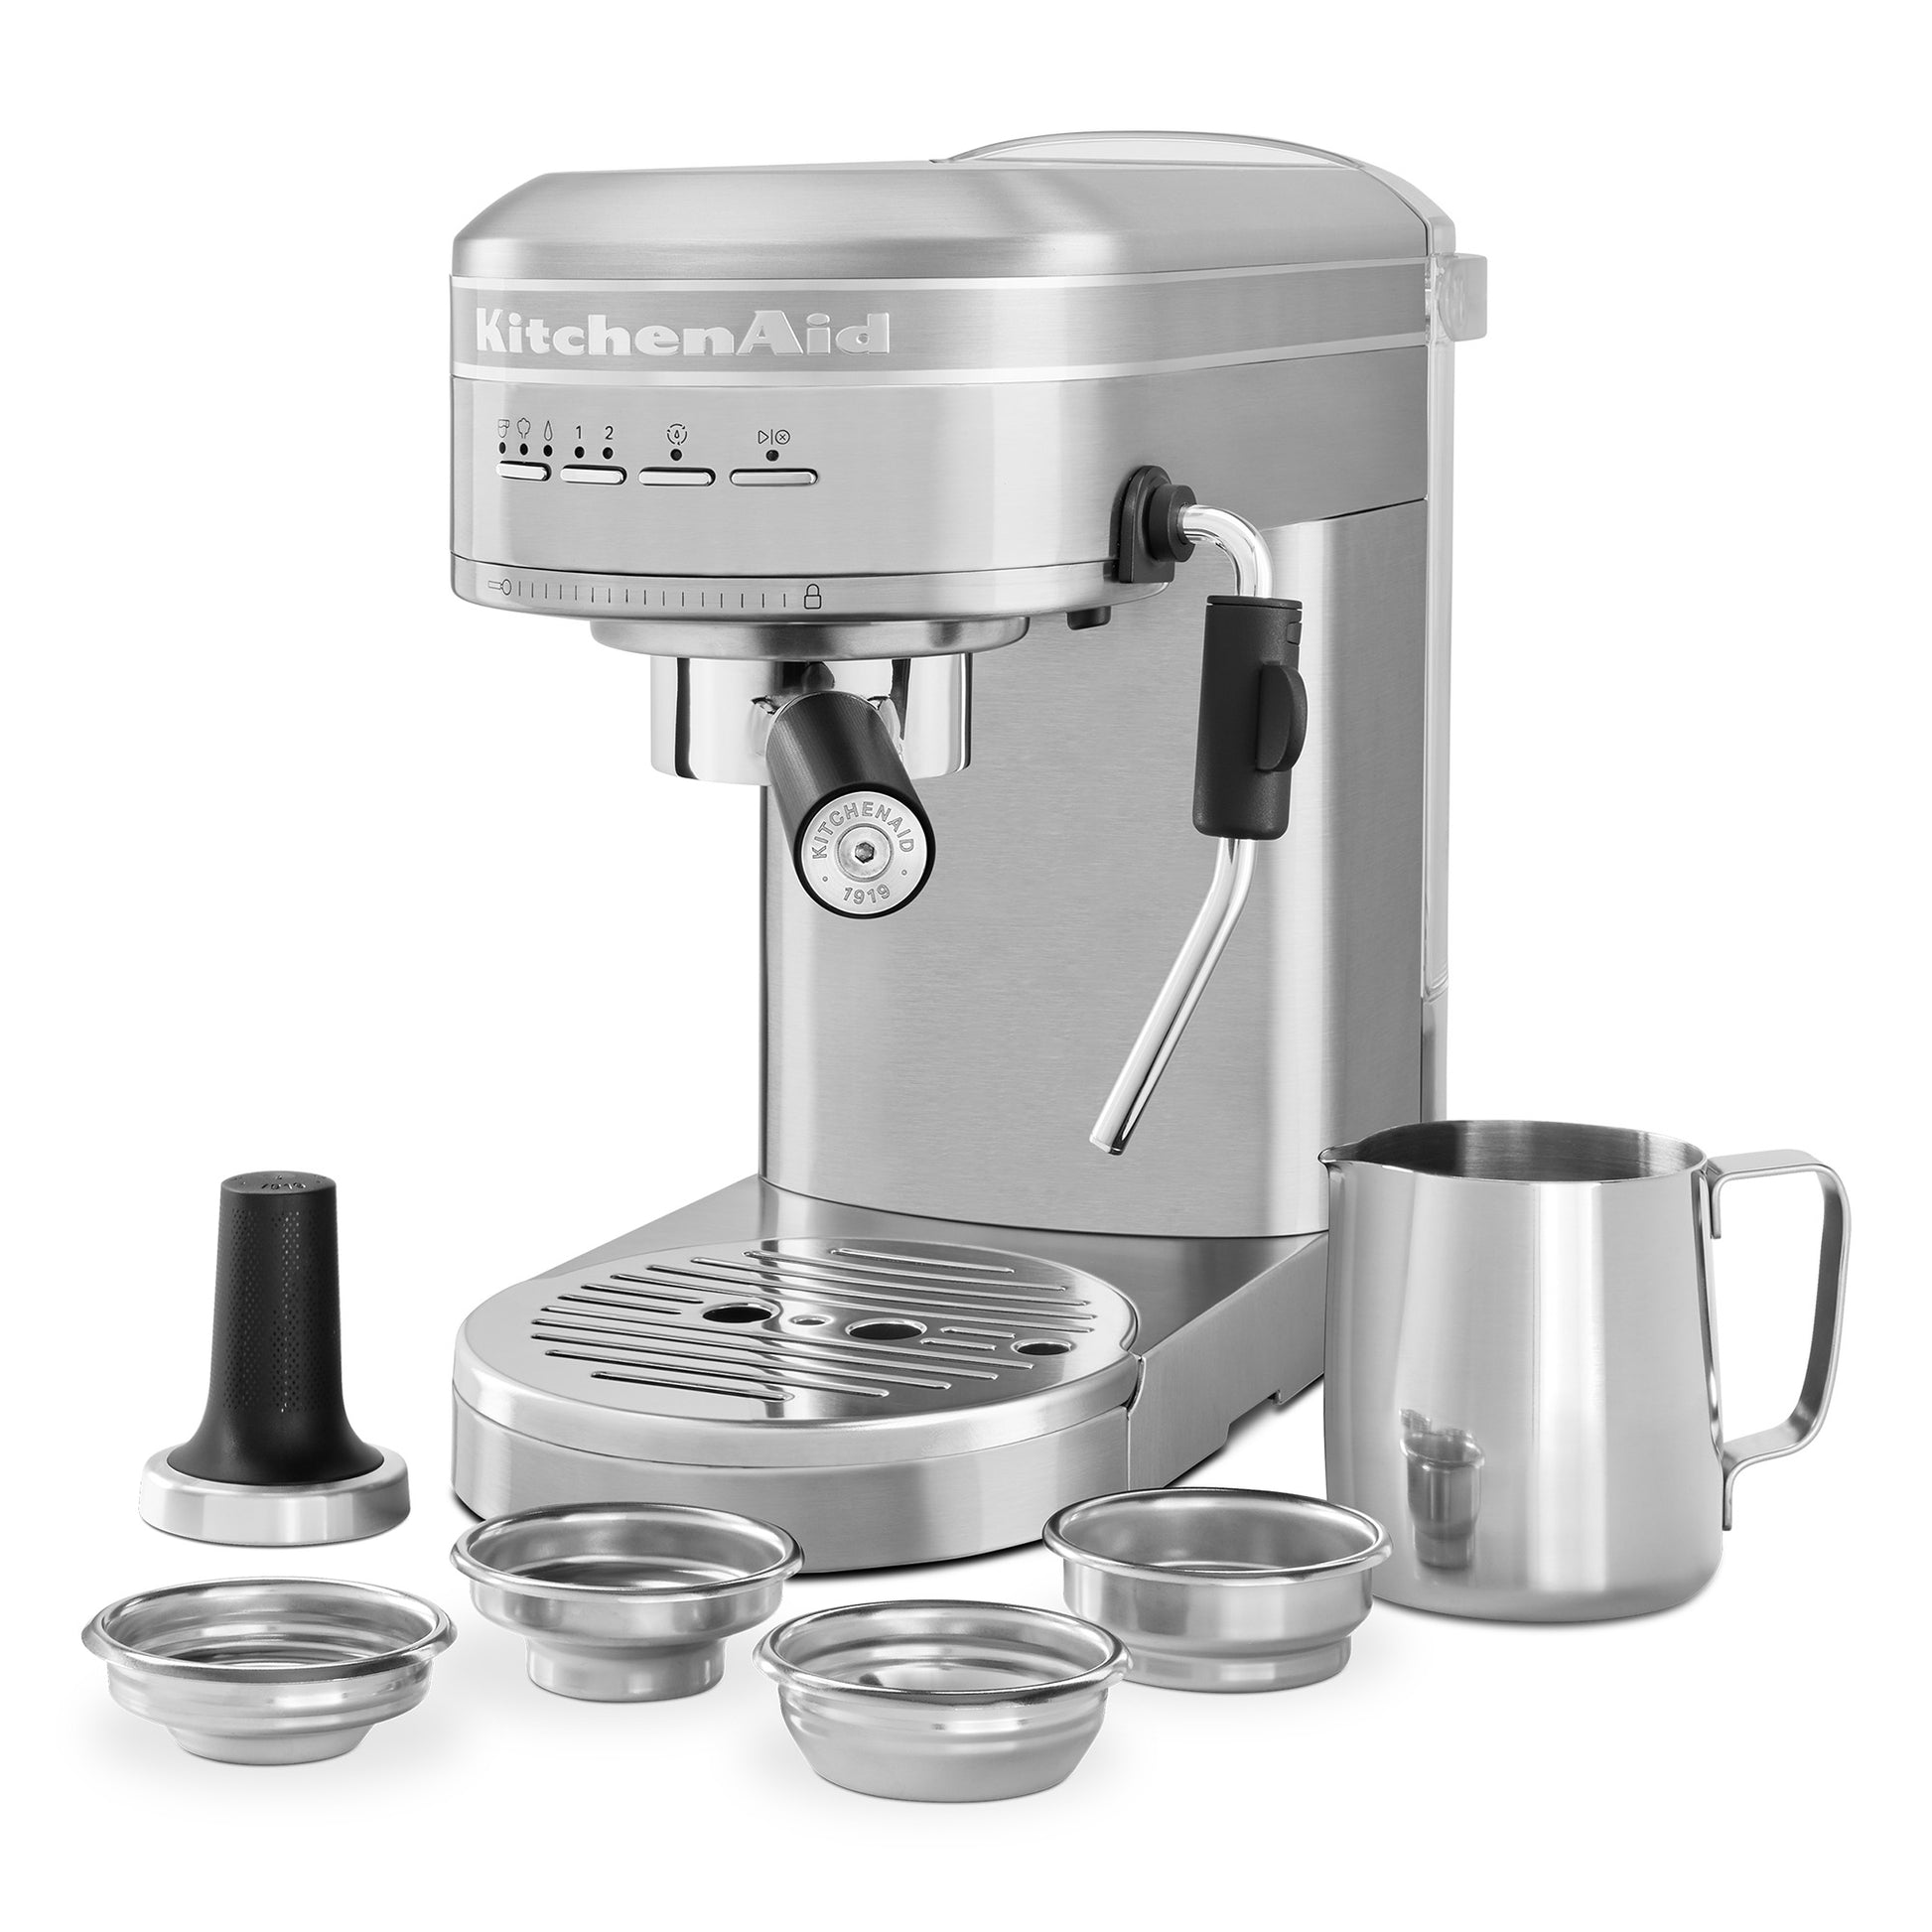 KitchenAid Semi-Automatic Espresso Machine has a 15-bar Italian